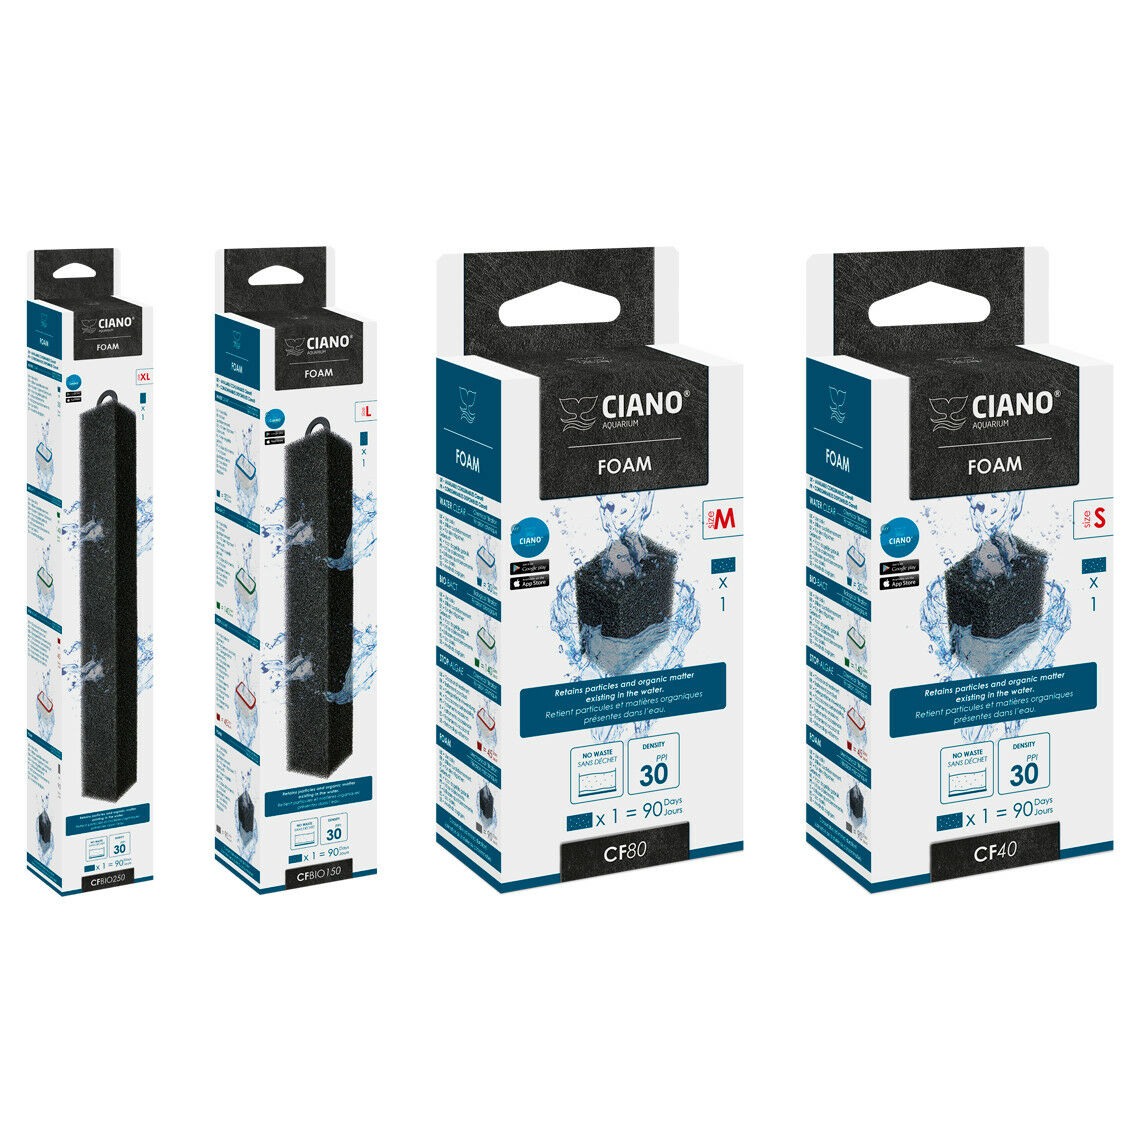 Ciano FOAM Filter Media Cartridges 4 Sizes